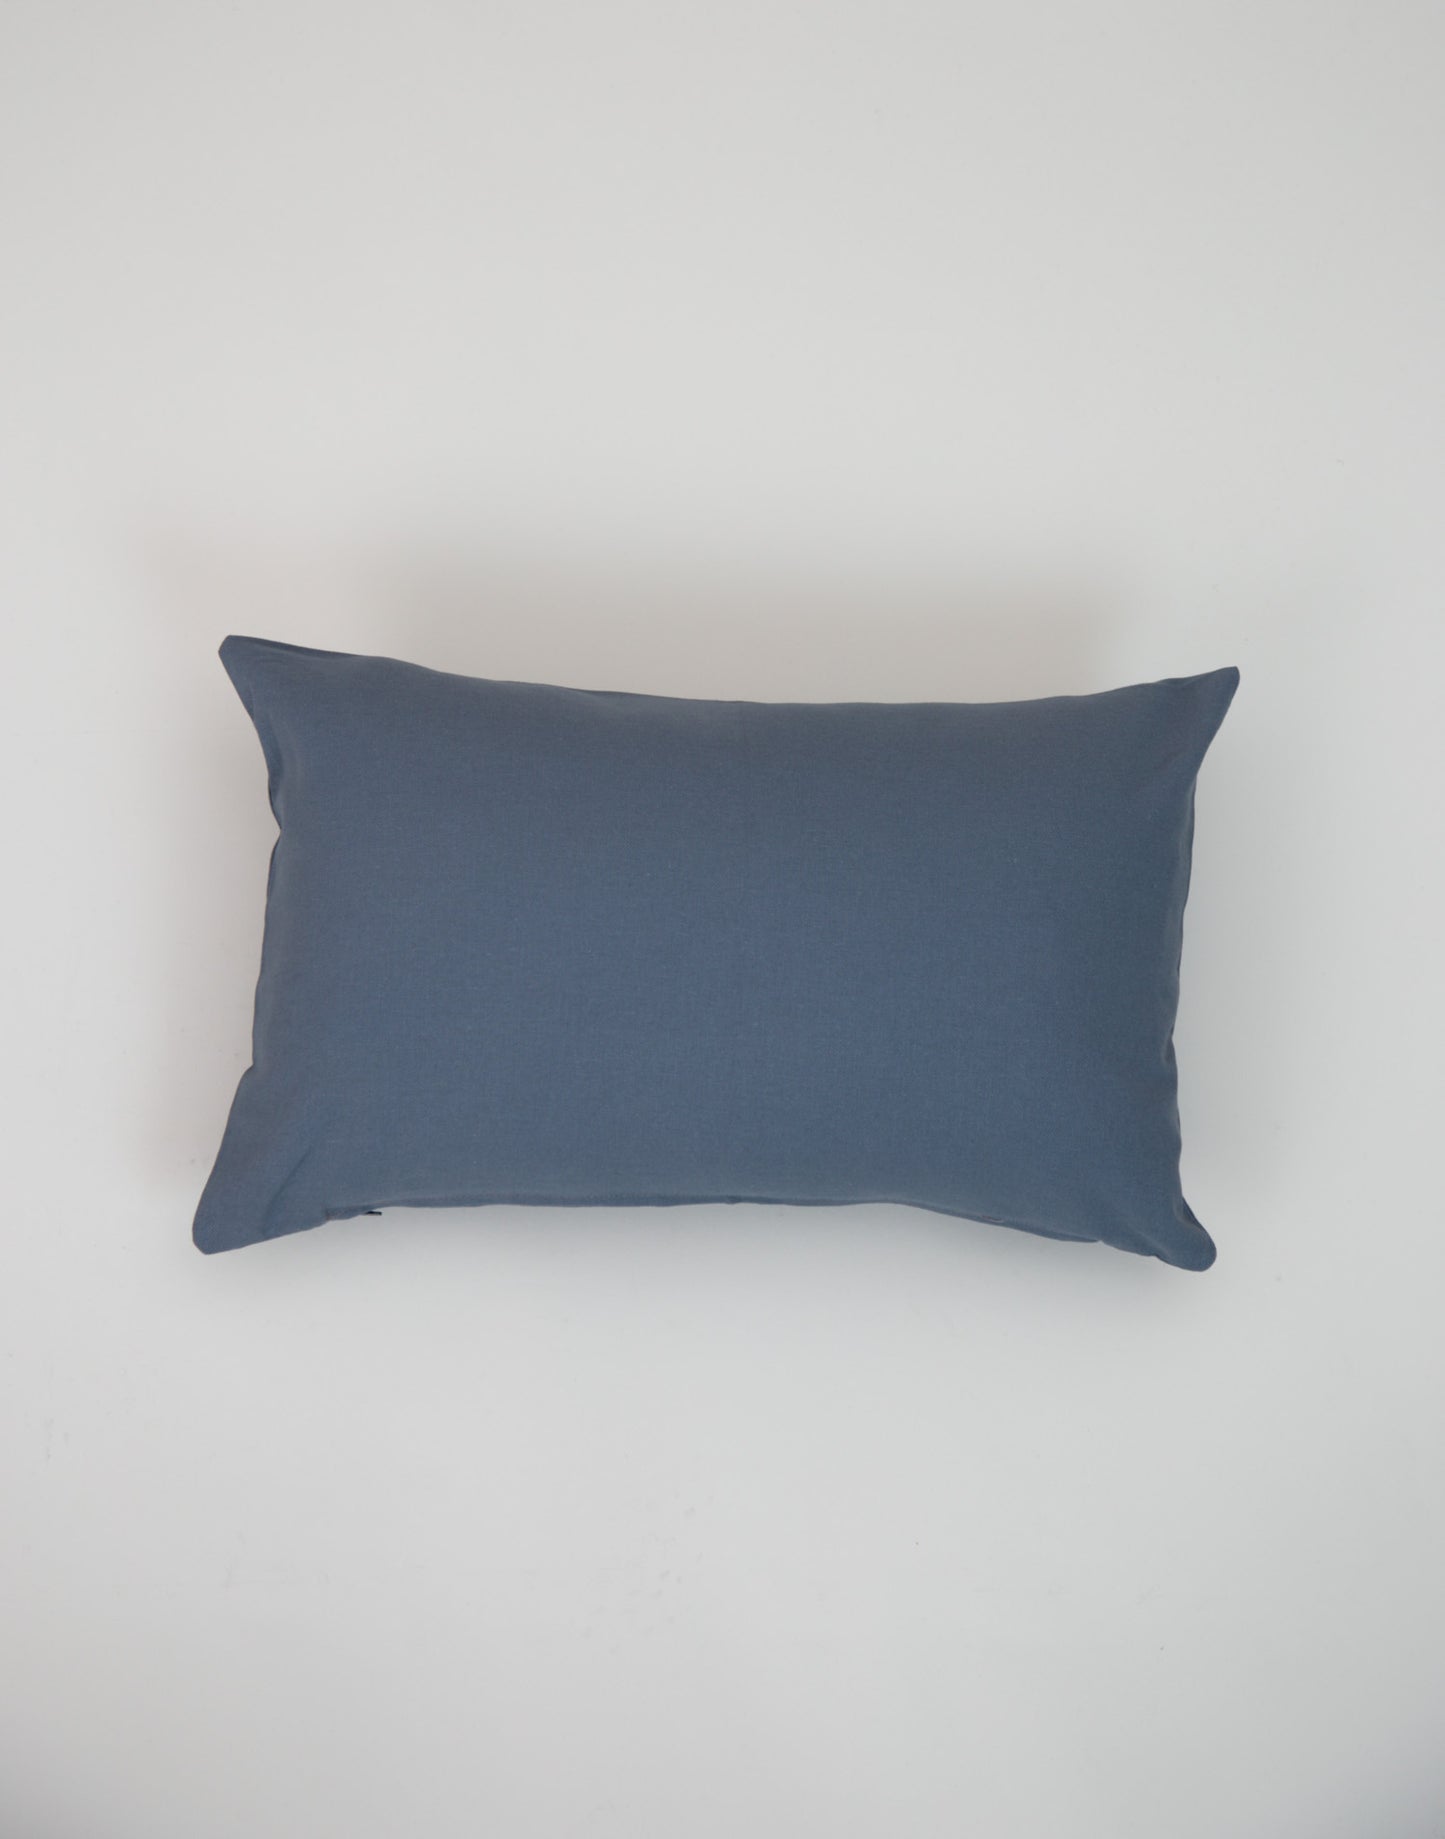 Panamá cushion cover 30 x 50 cm